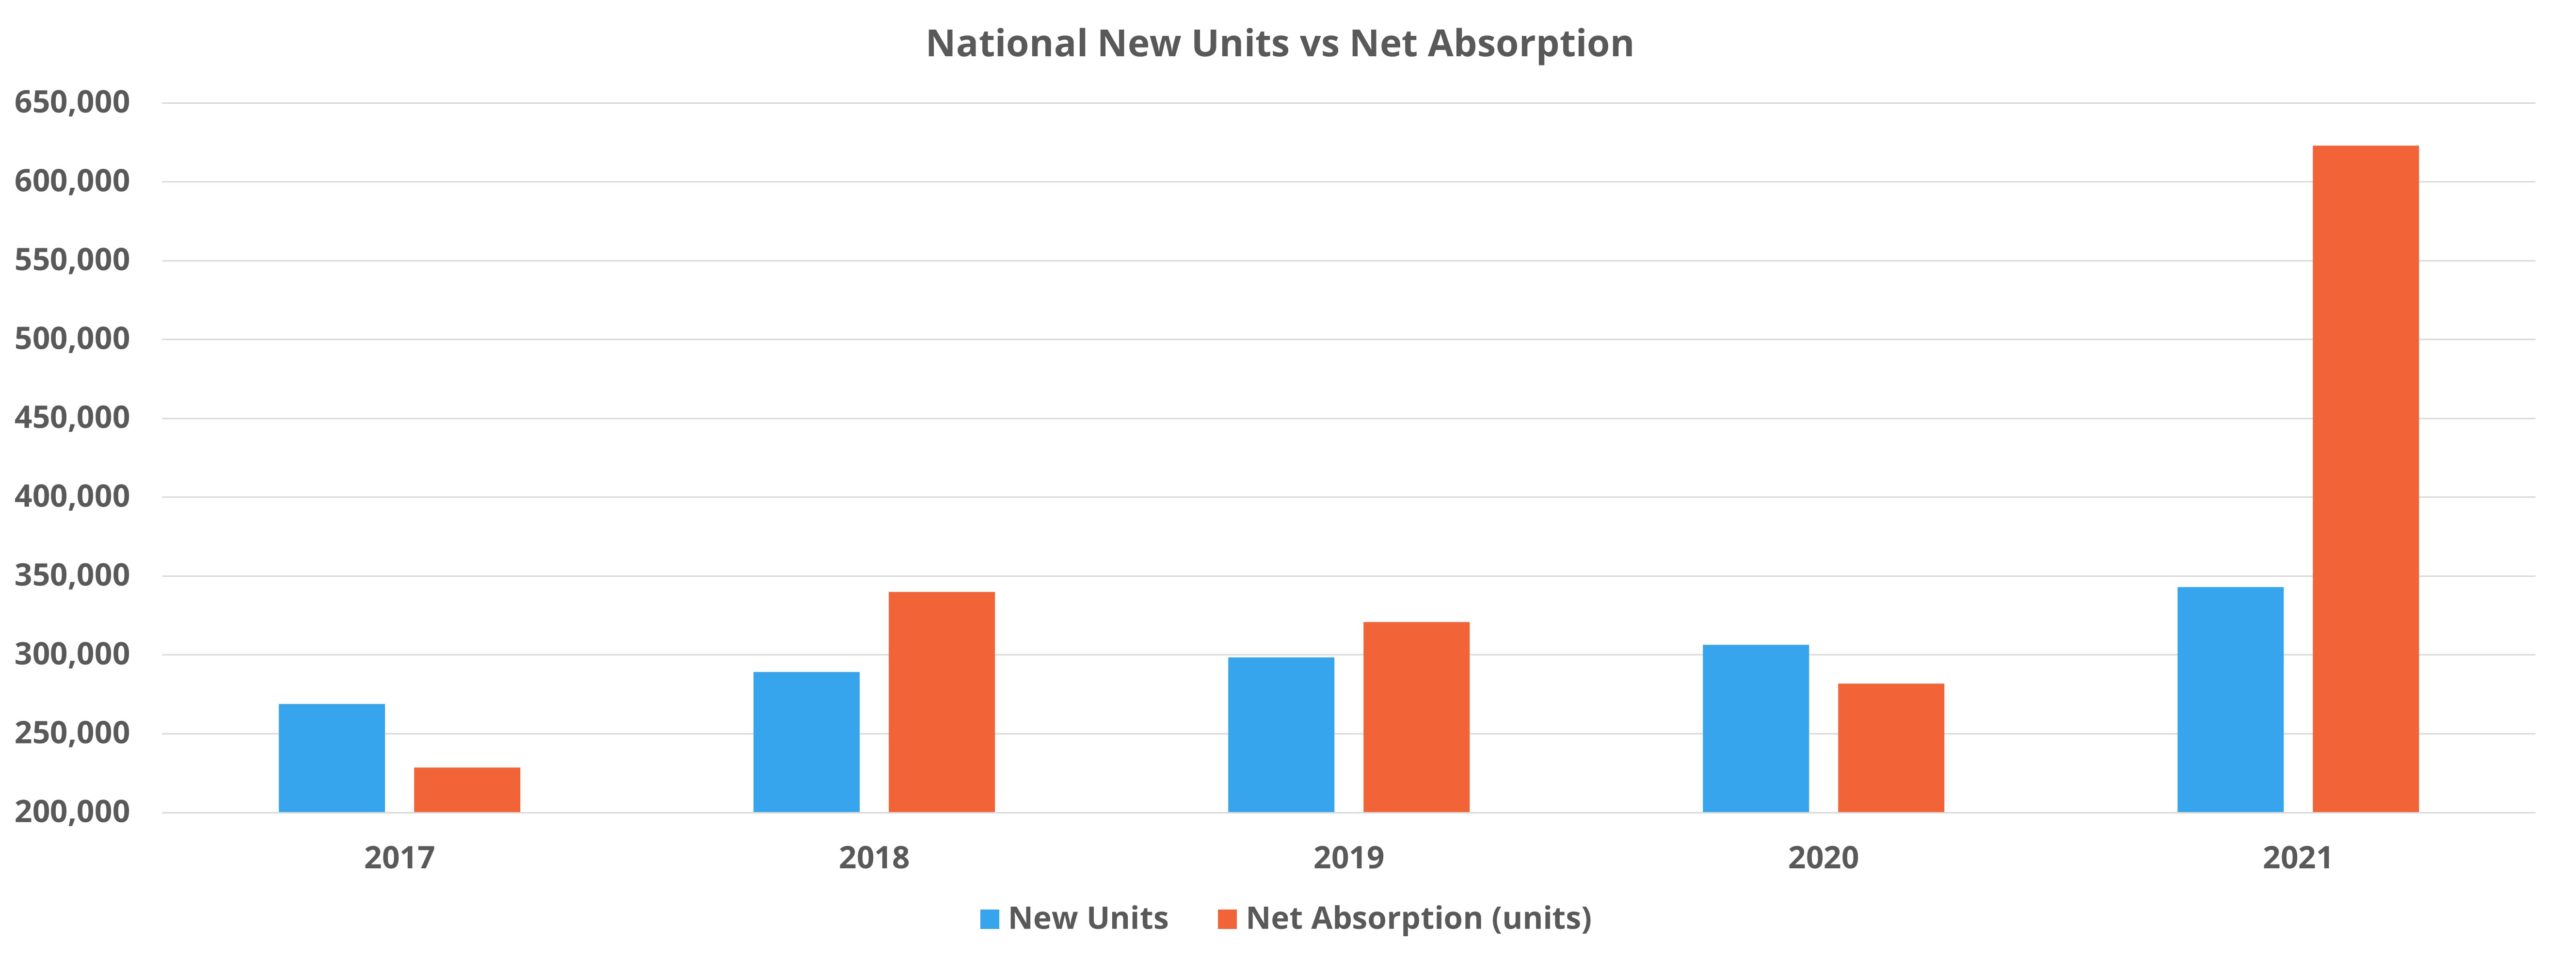 National New Units vs Net Absorption